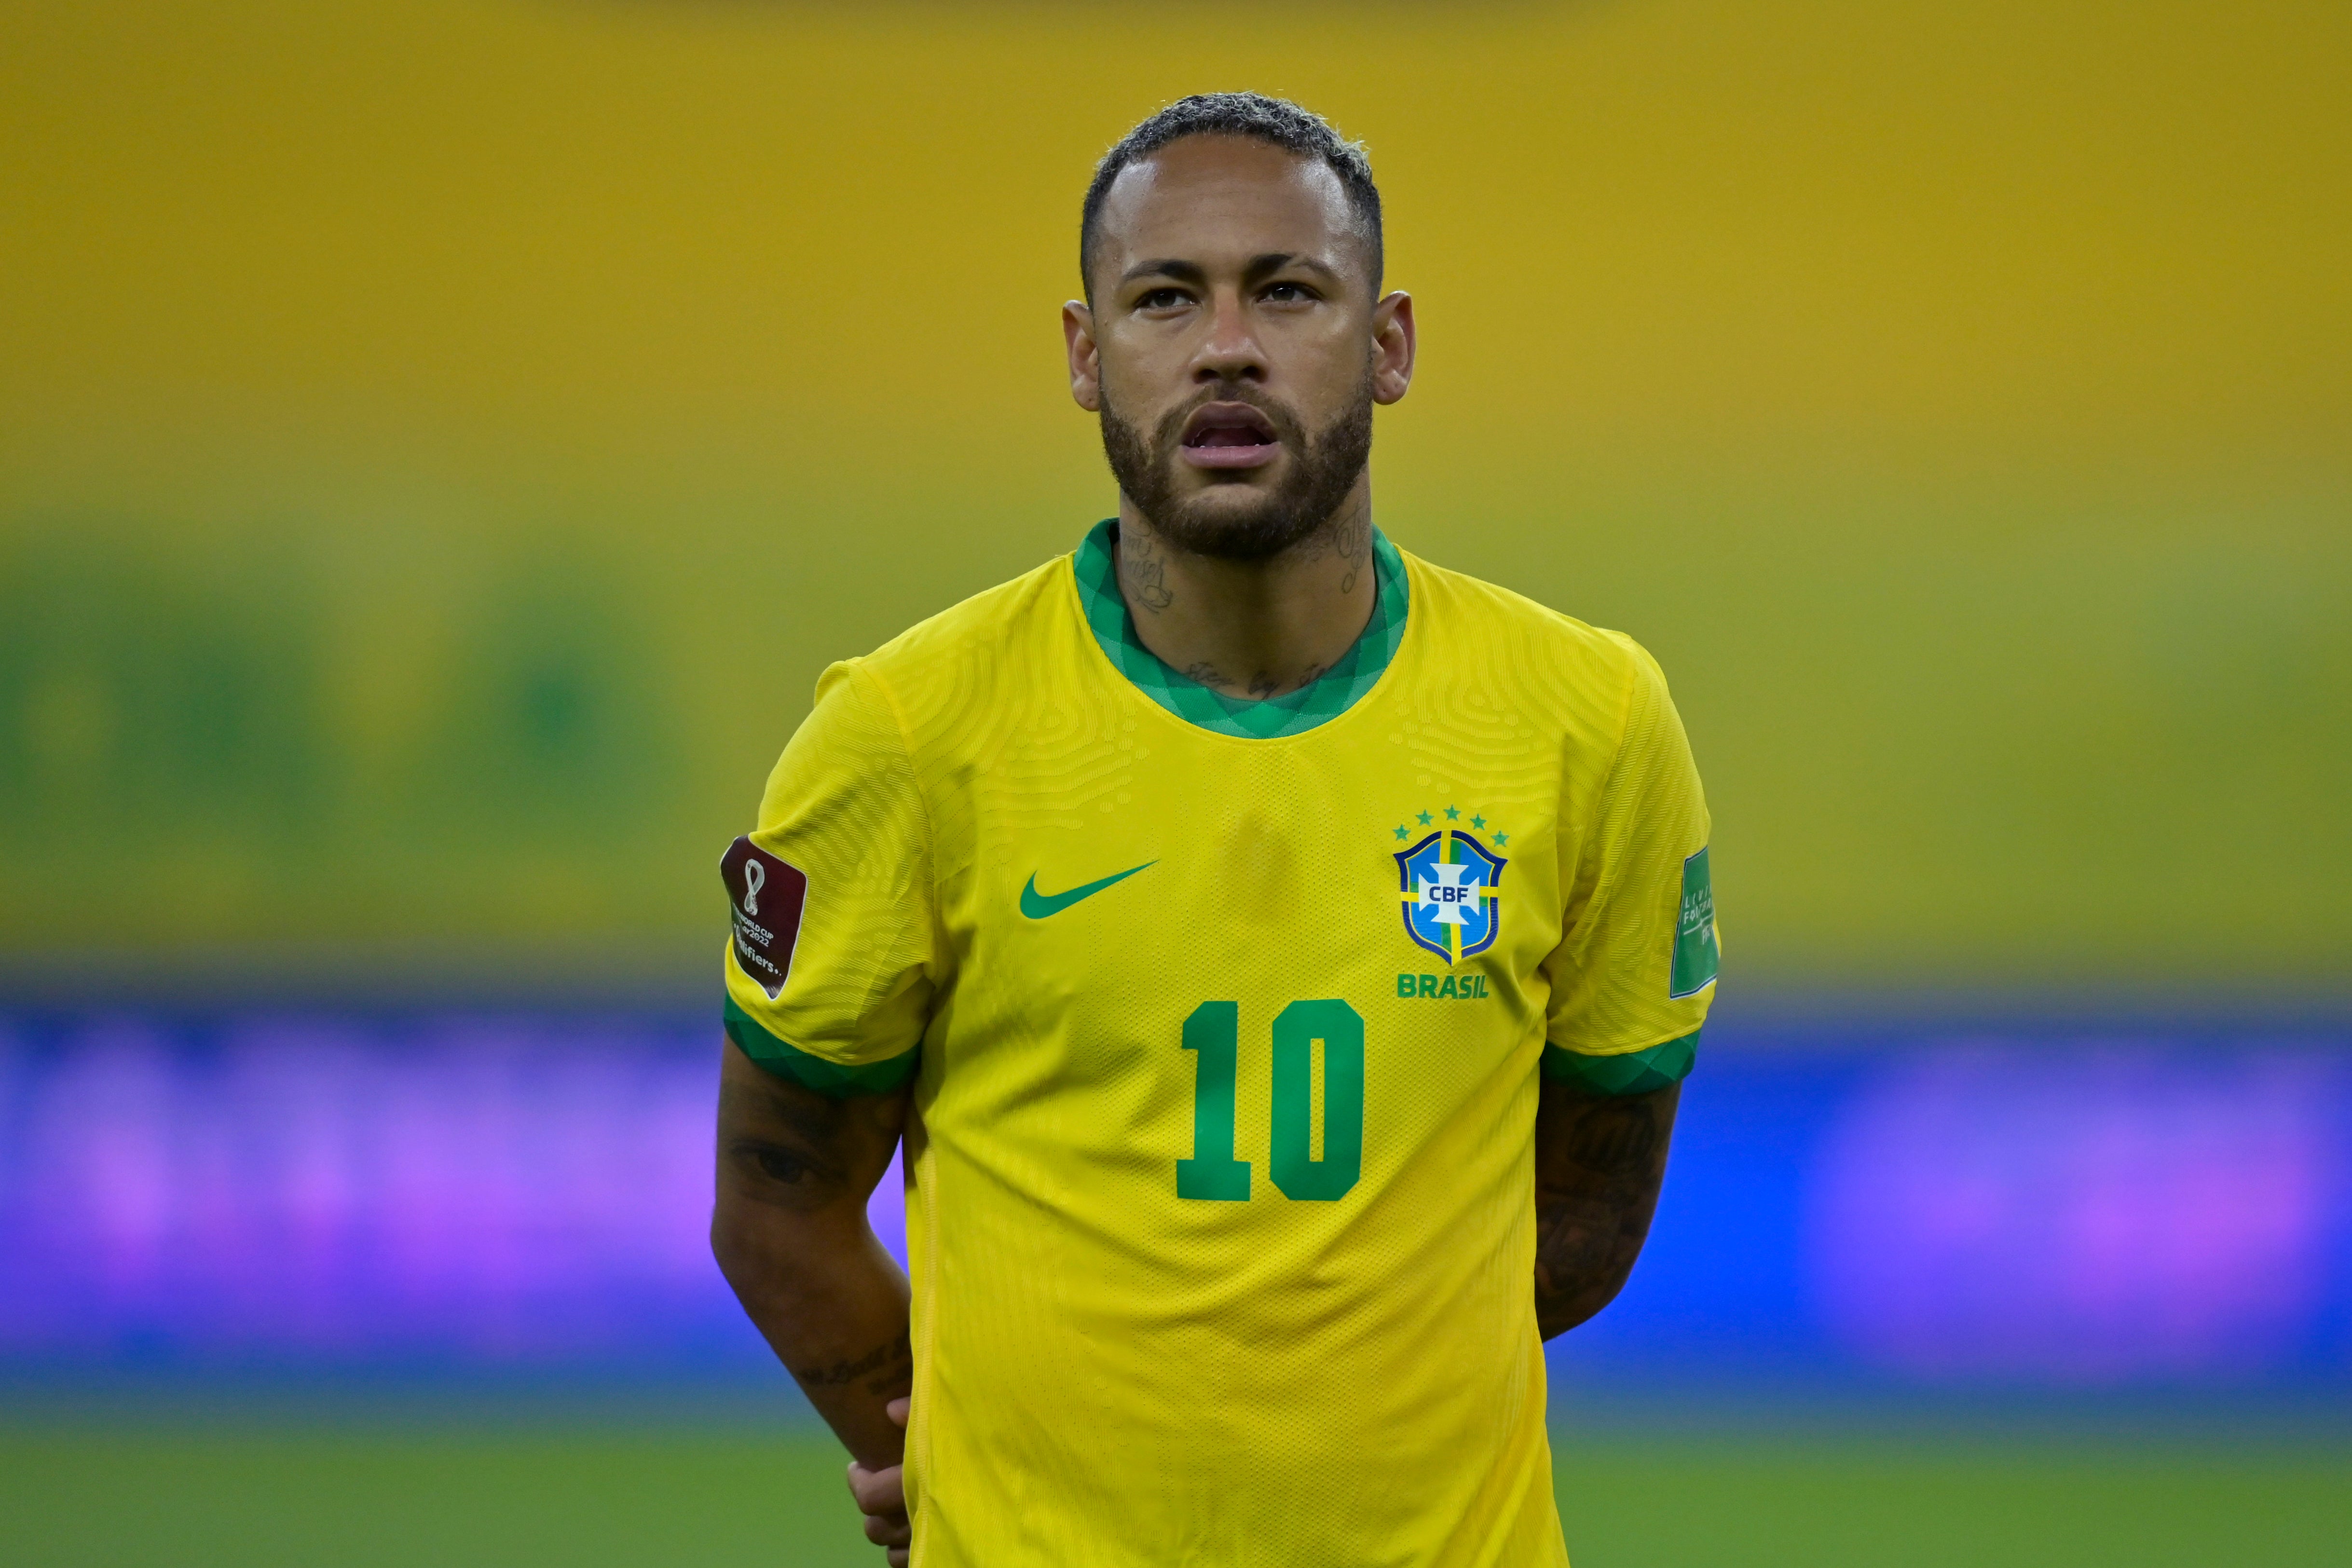 Neymar has made 114 appearances for Brazil